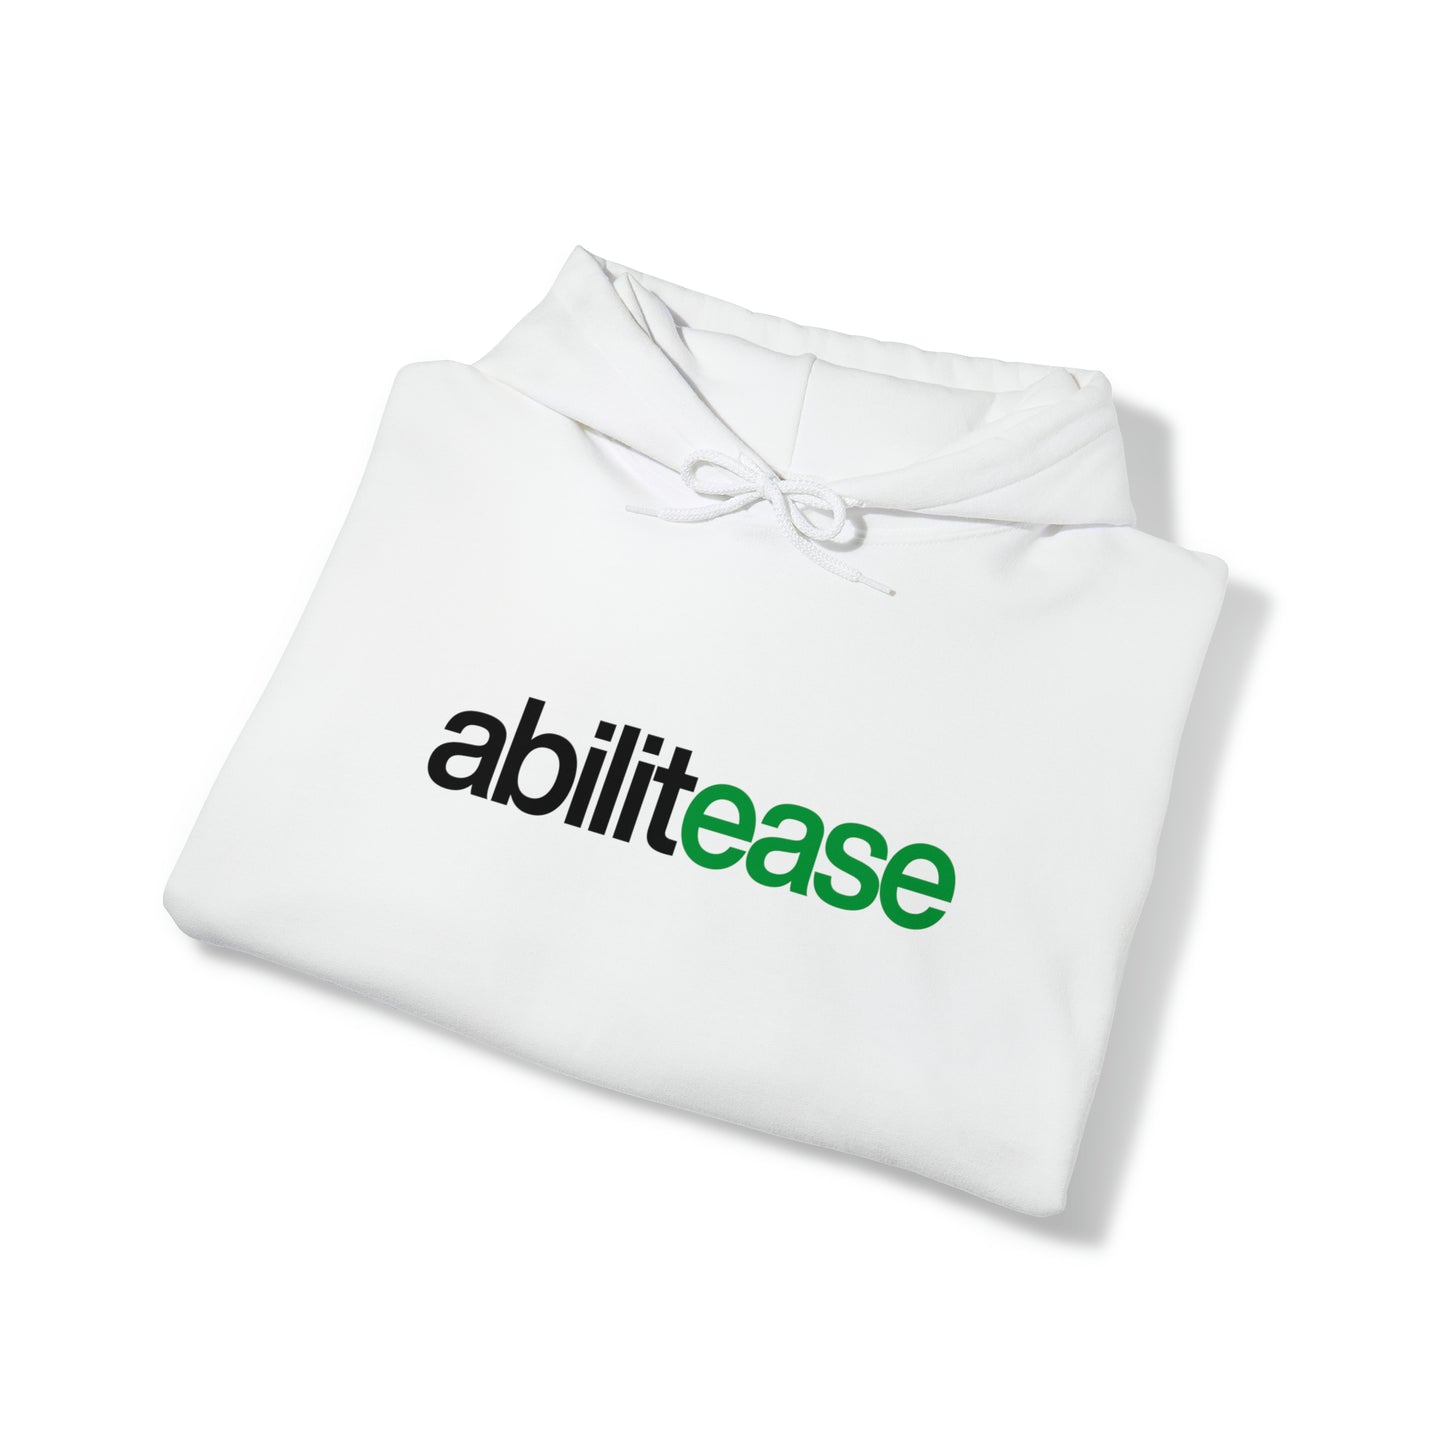 Abilitease Classic Logo - Unisex Heavy Blend™ Hooded Sweatshirt